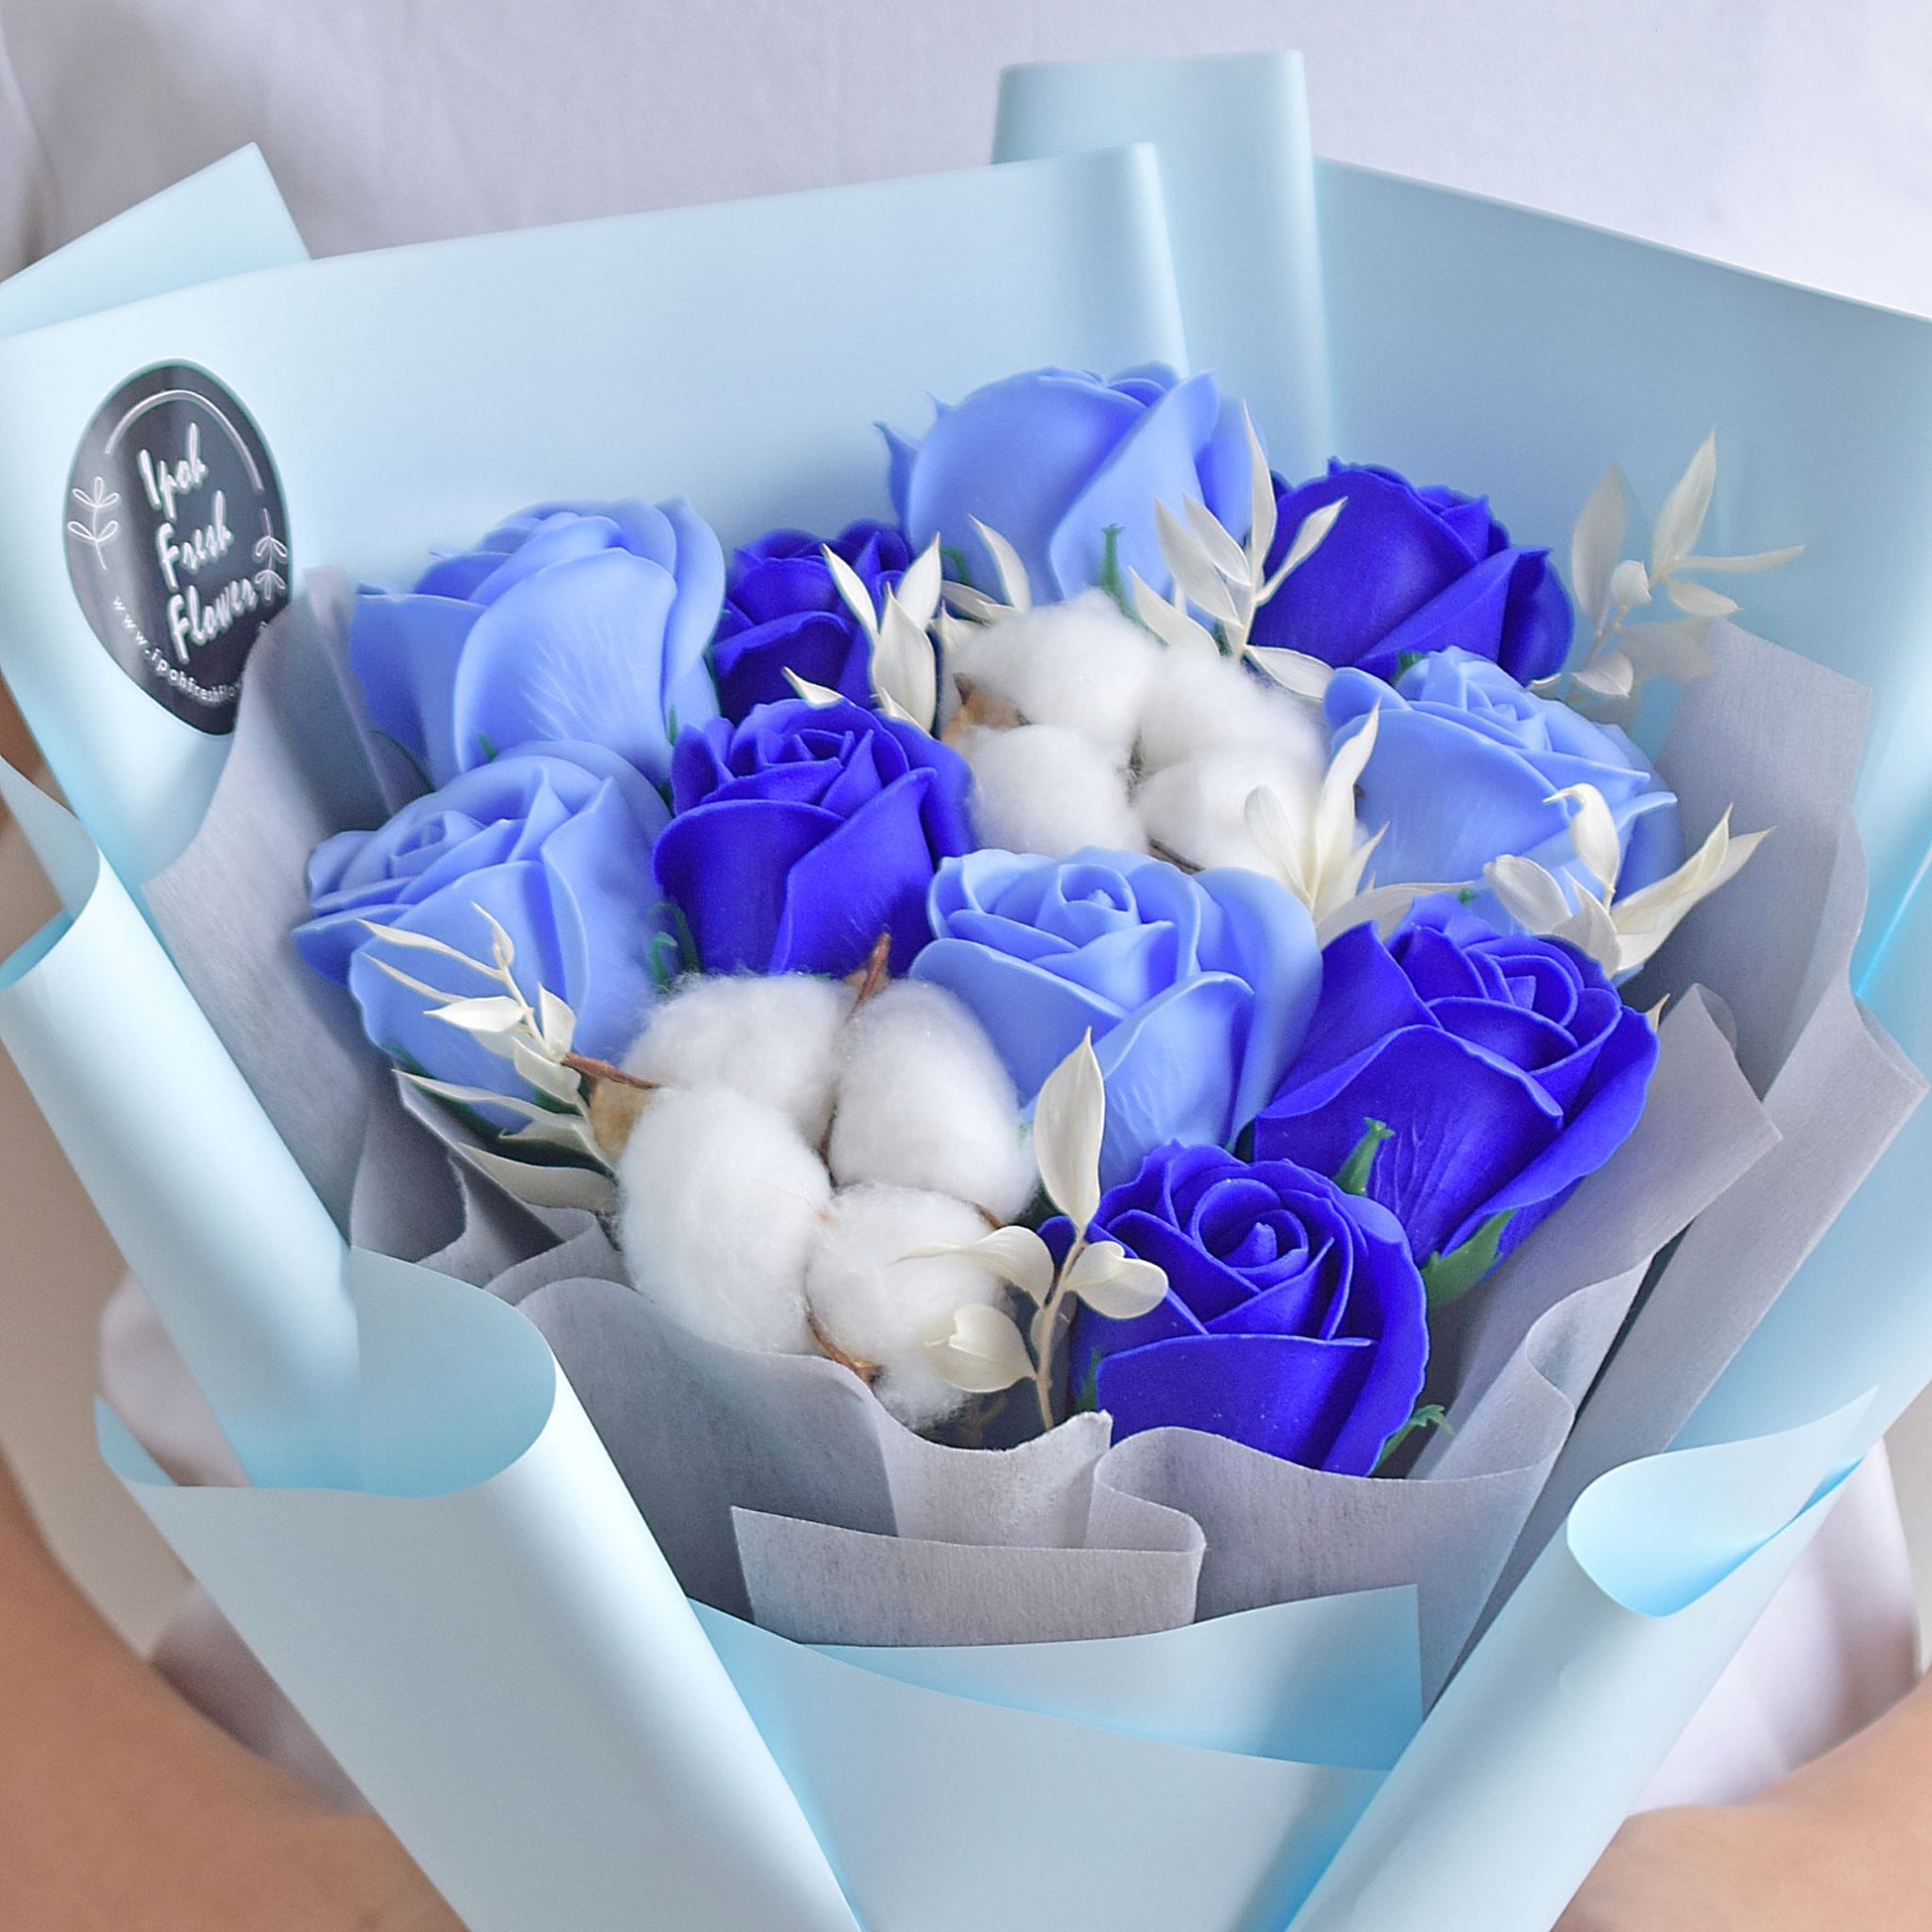 Tiara| Soap Flower Bouquet Delivery